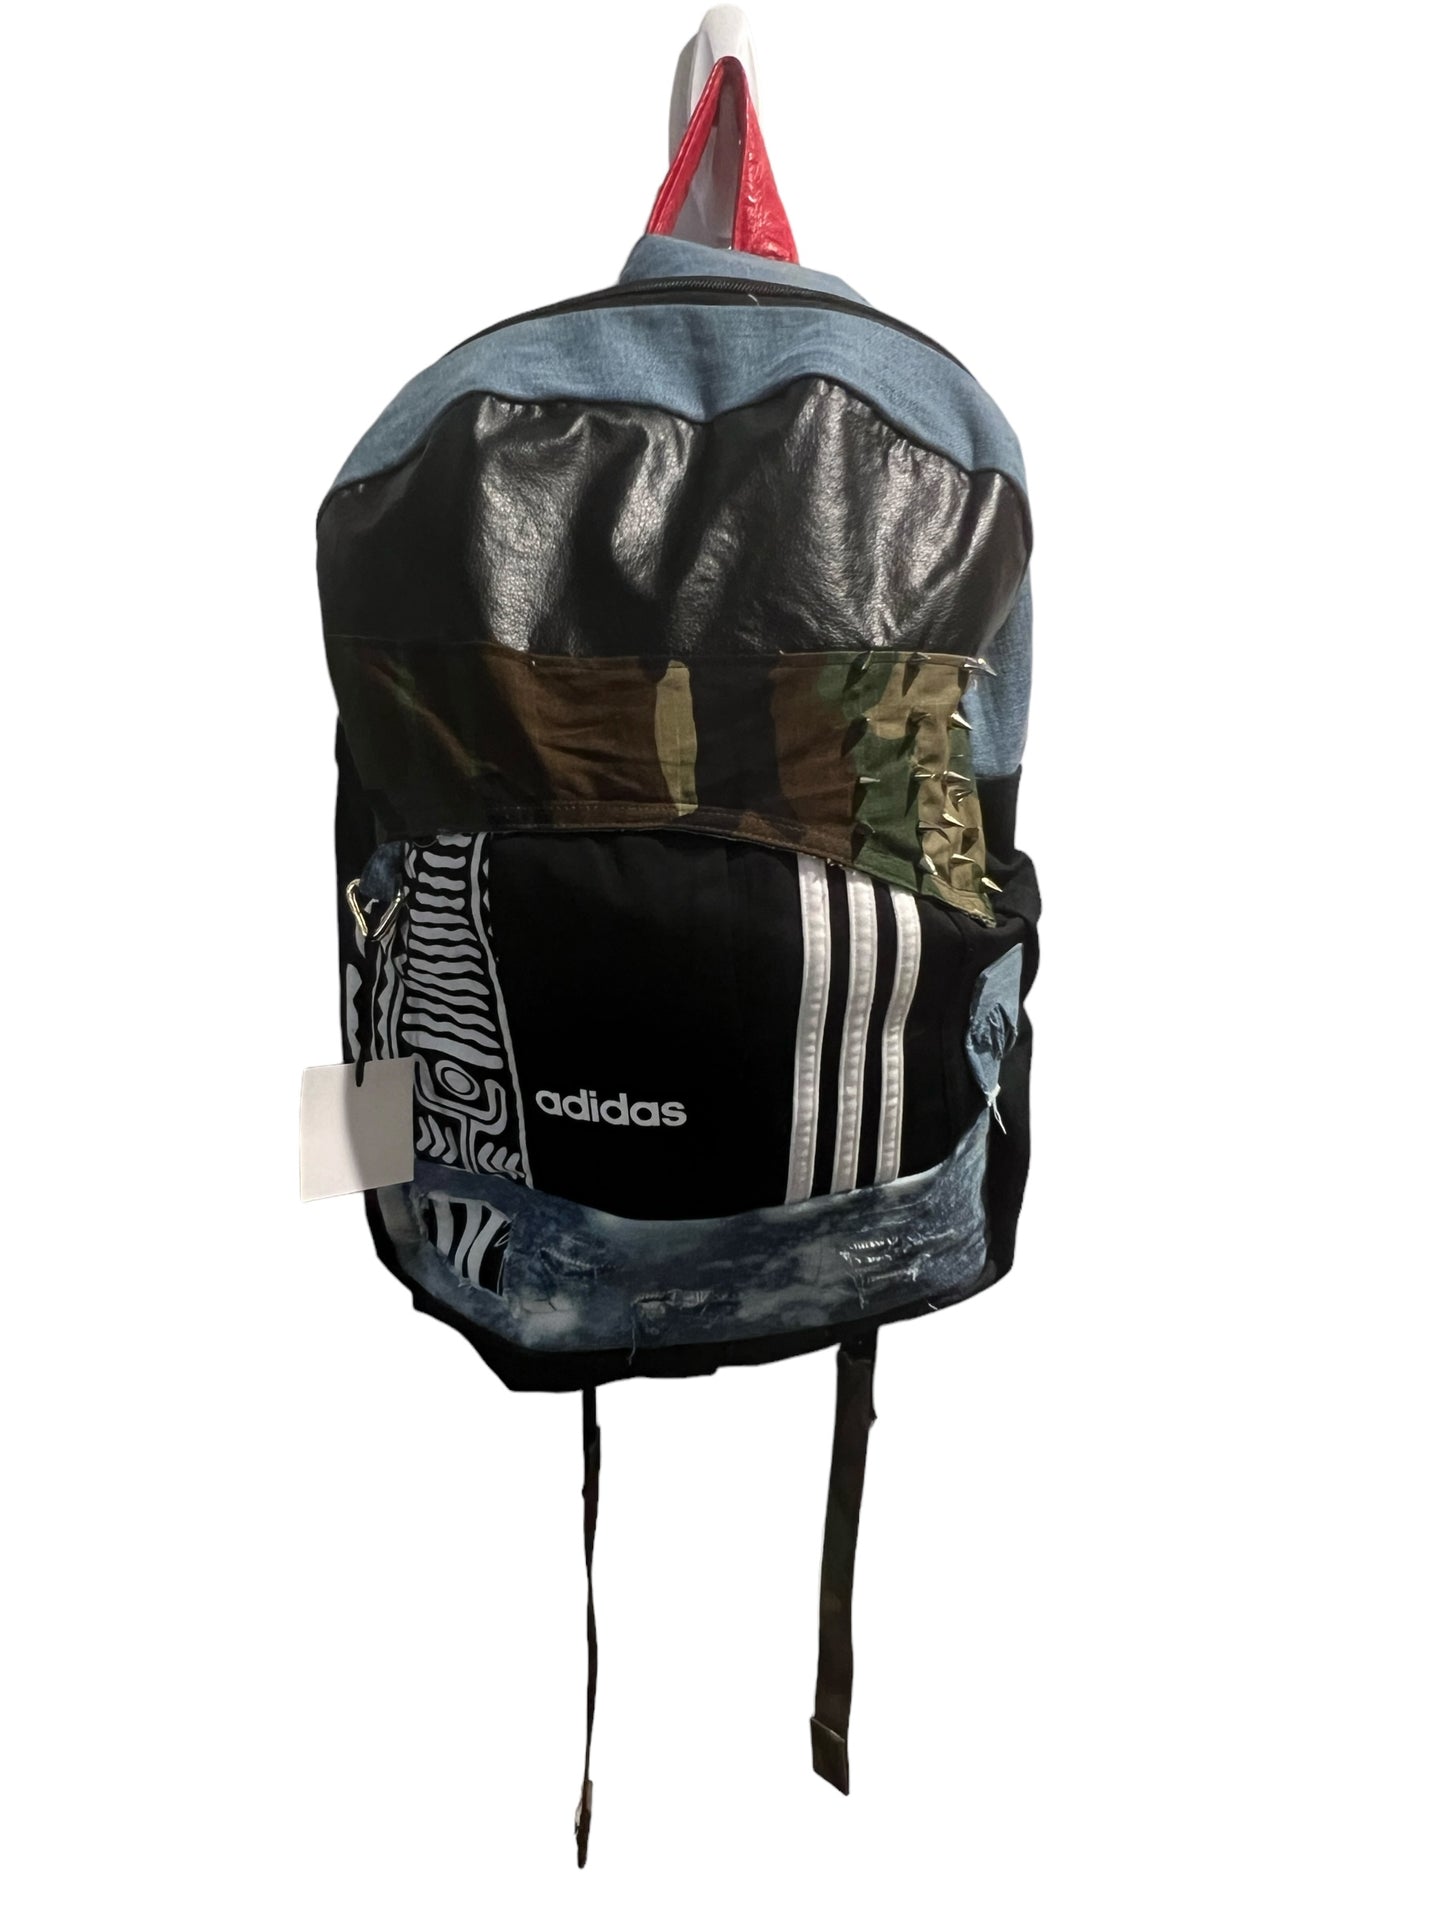 Adidas x Levi’s Denim backpack